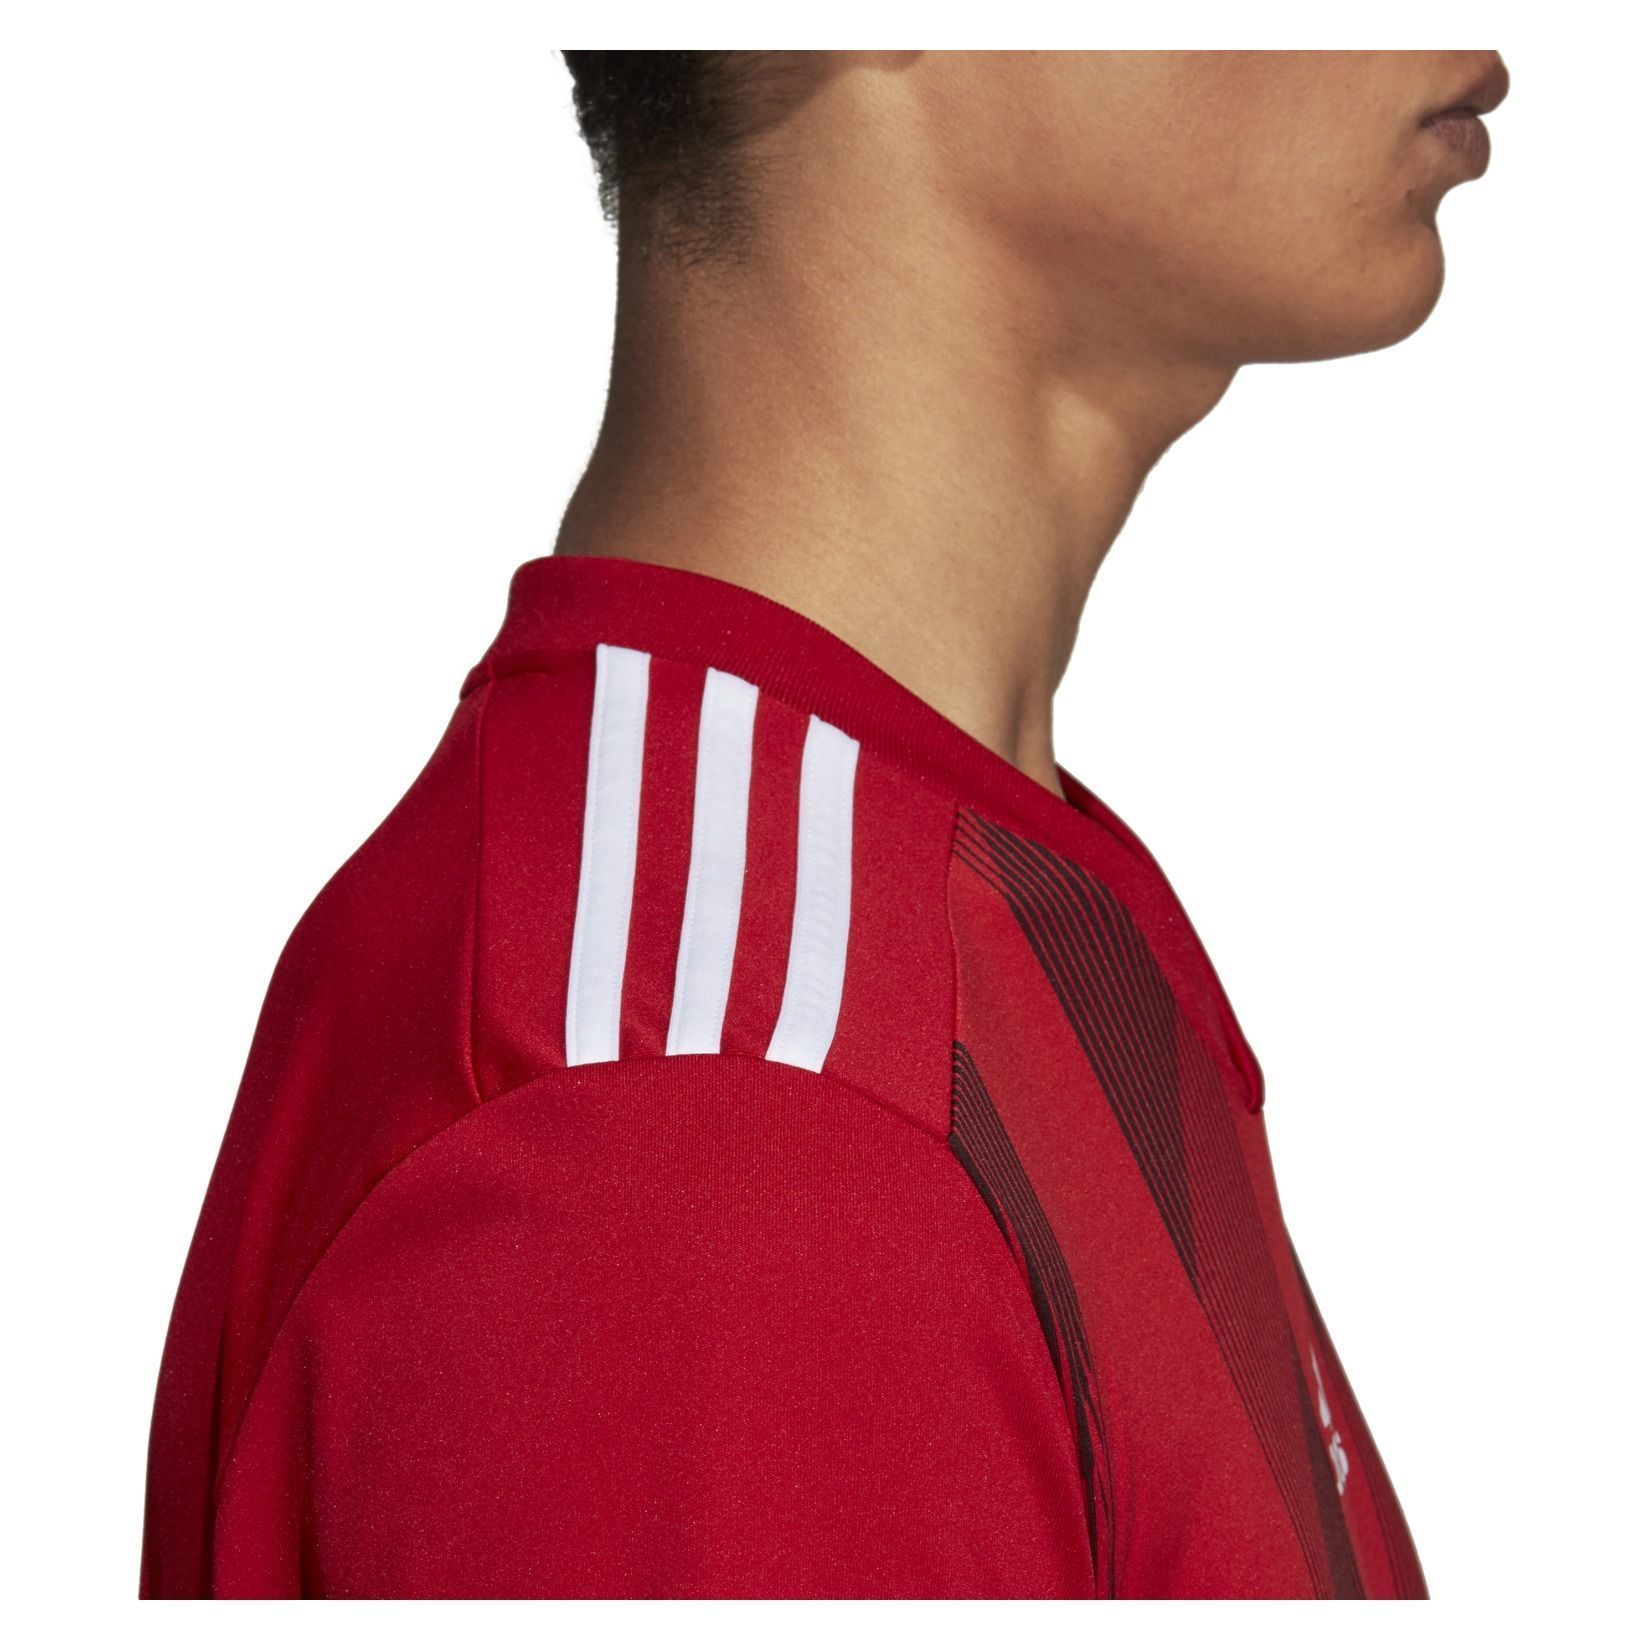 Adidas Striped 19 Short Sleeve Shirt